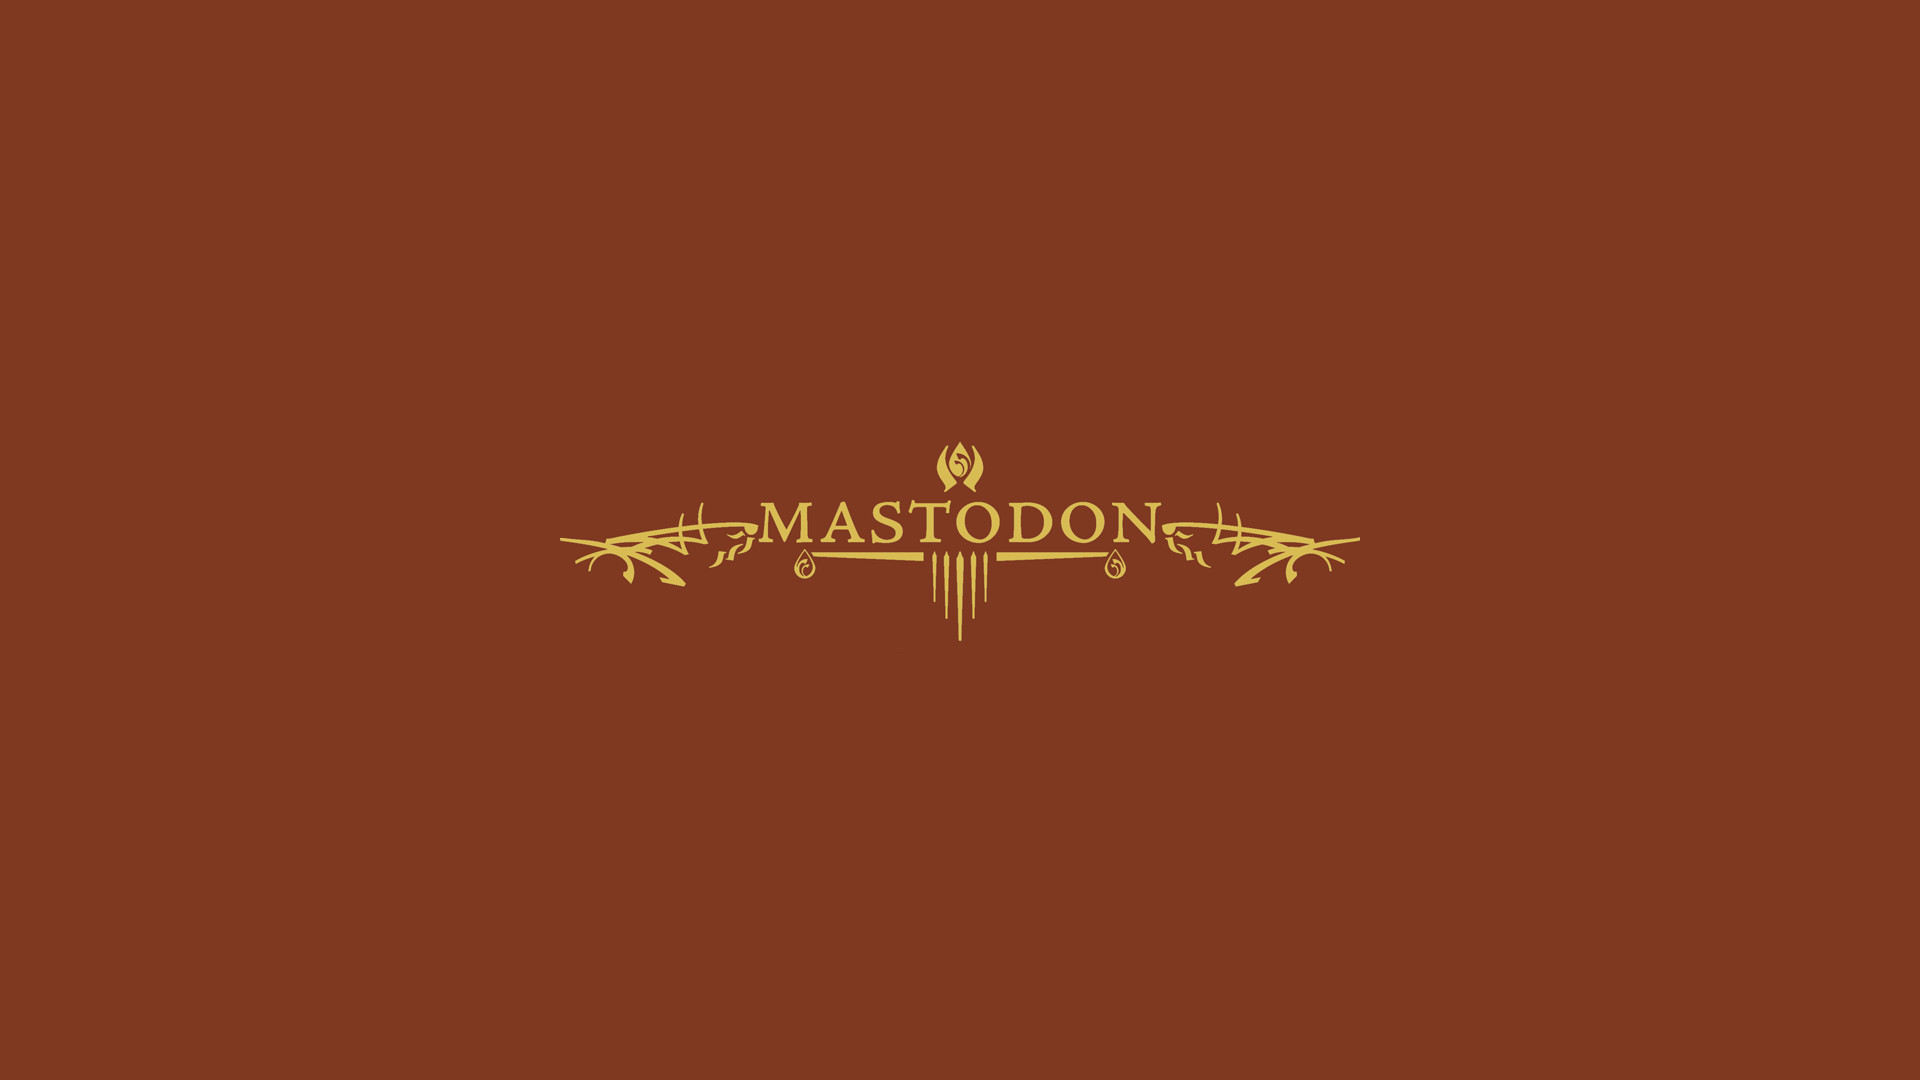 Mastodon Wallpaper Image